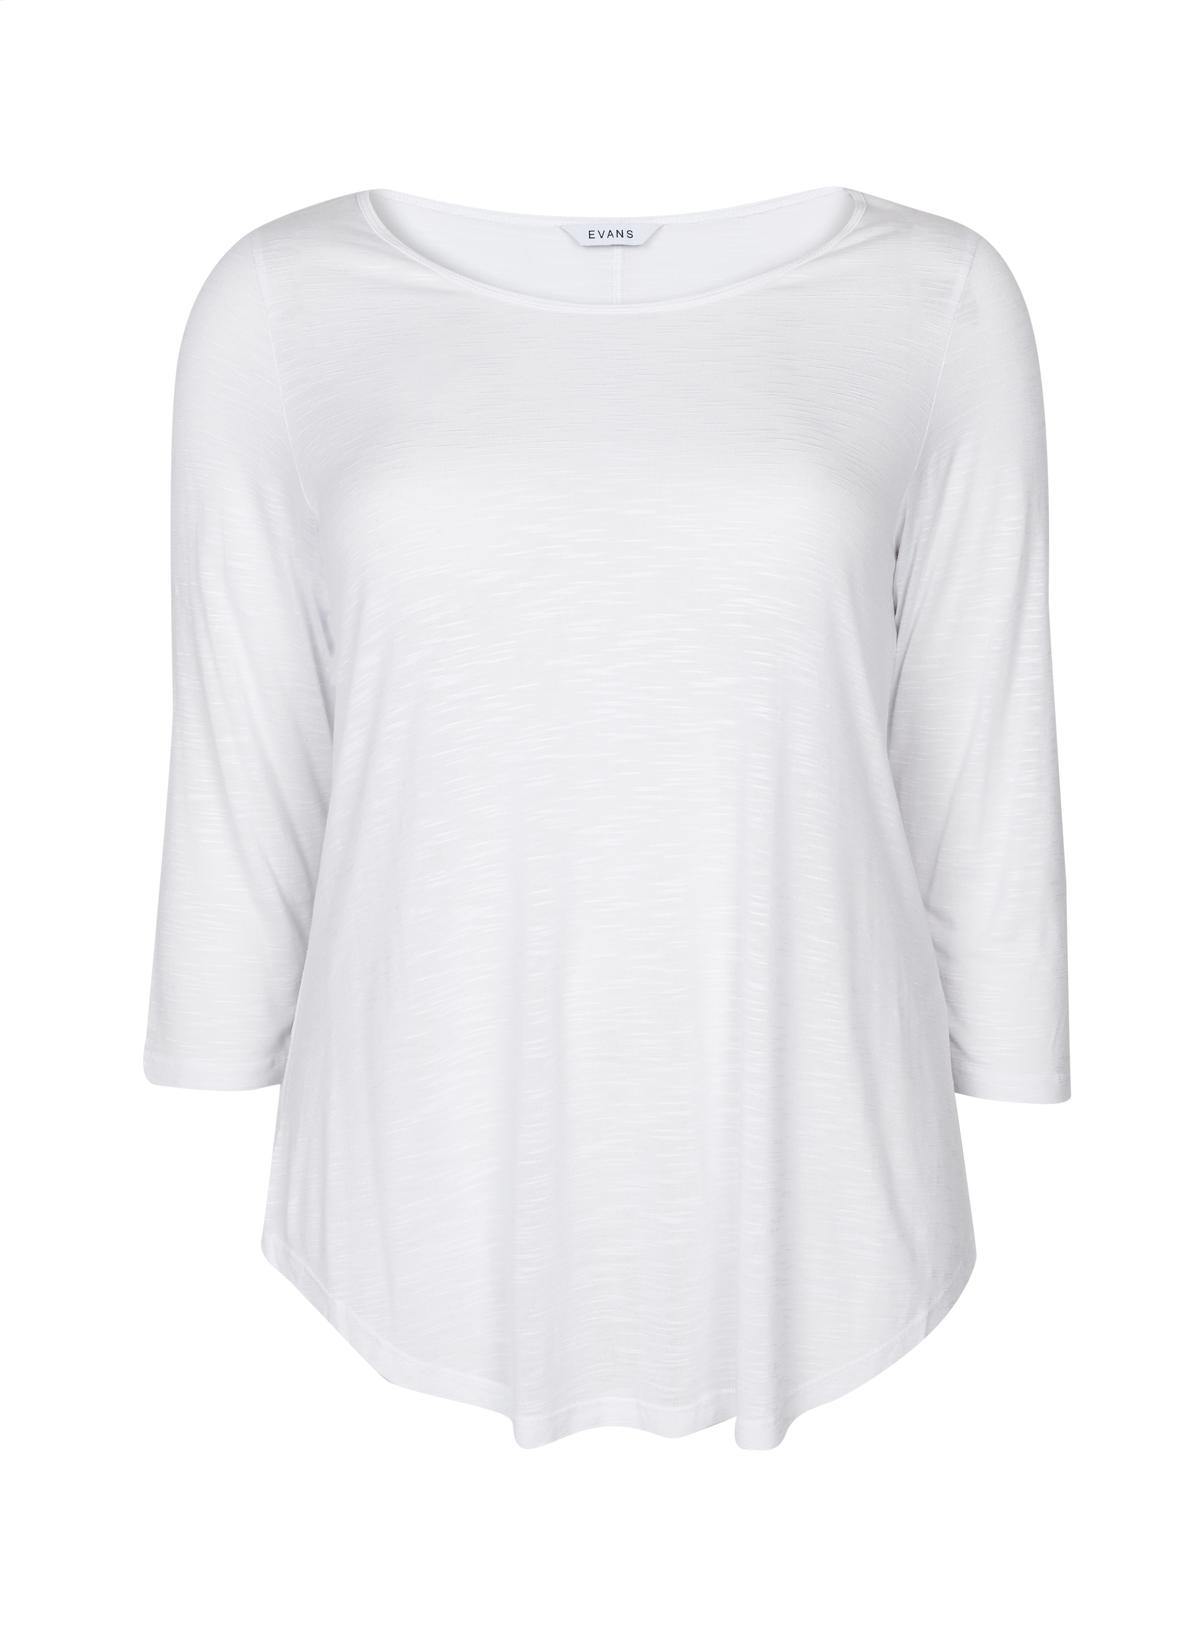 3/4 Sleeve White T-Shirt 2